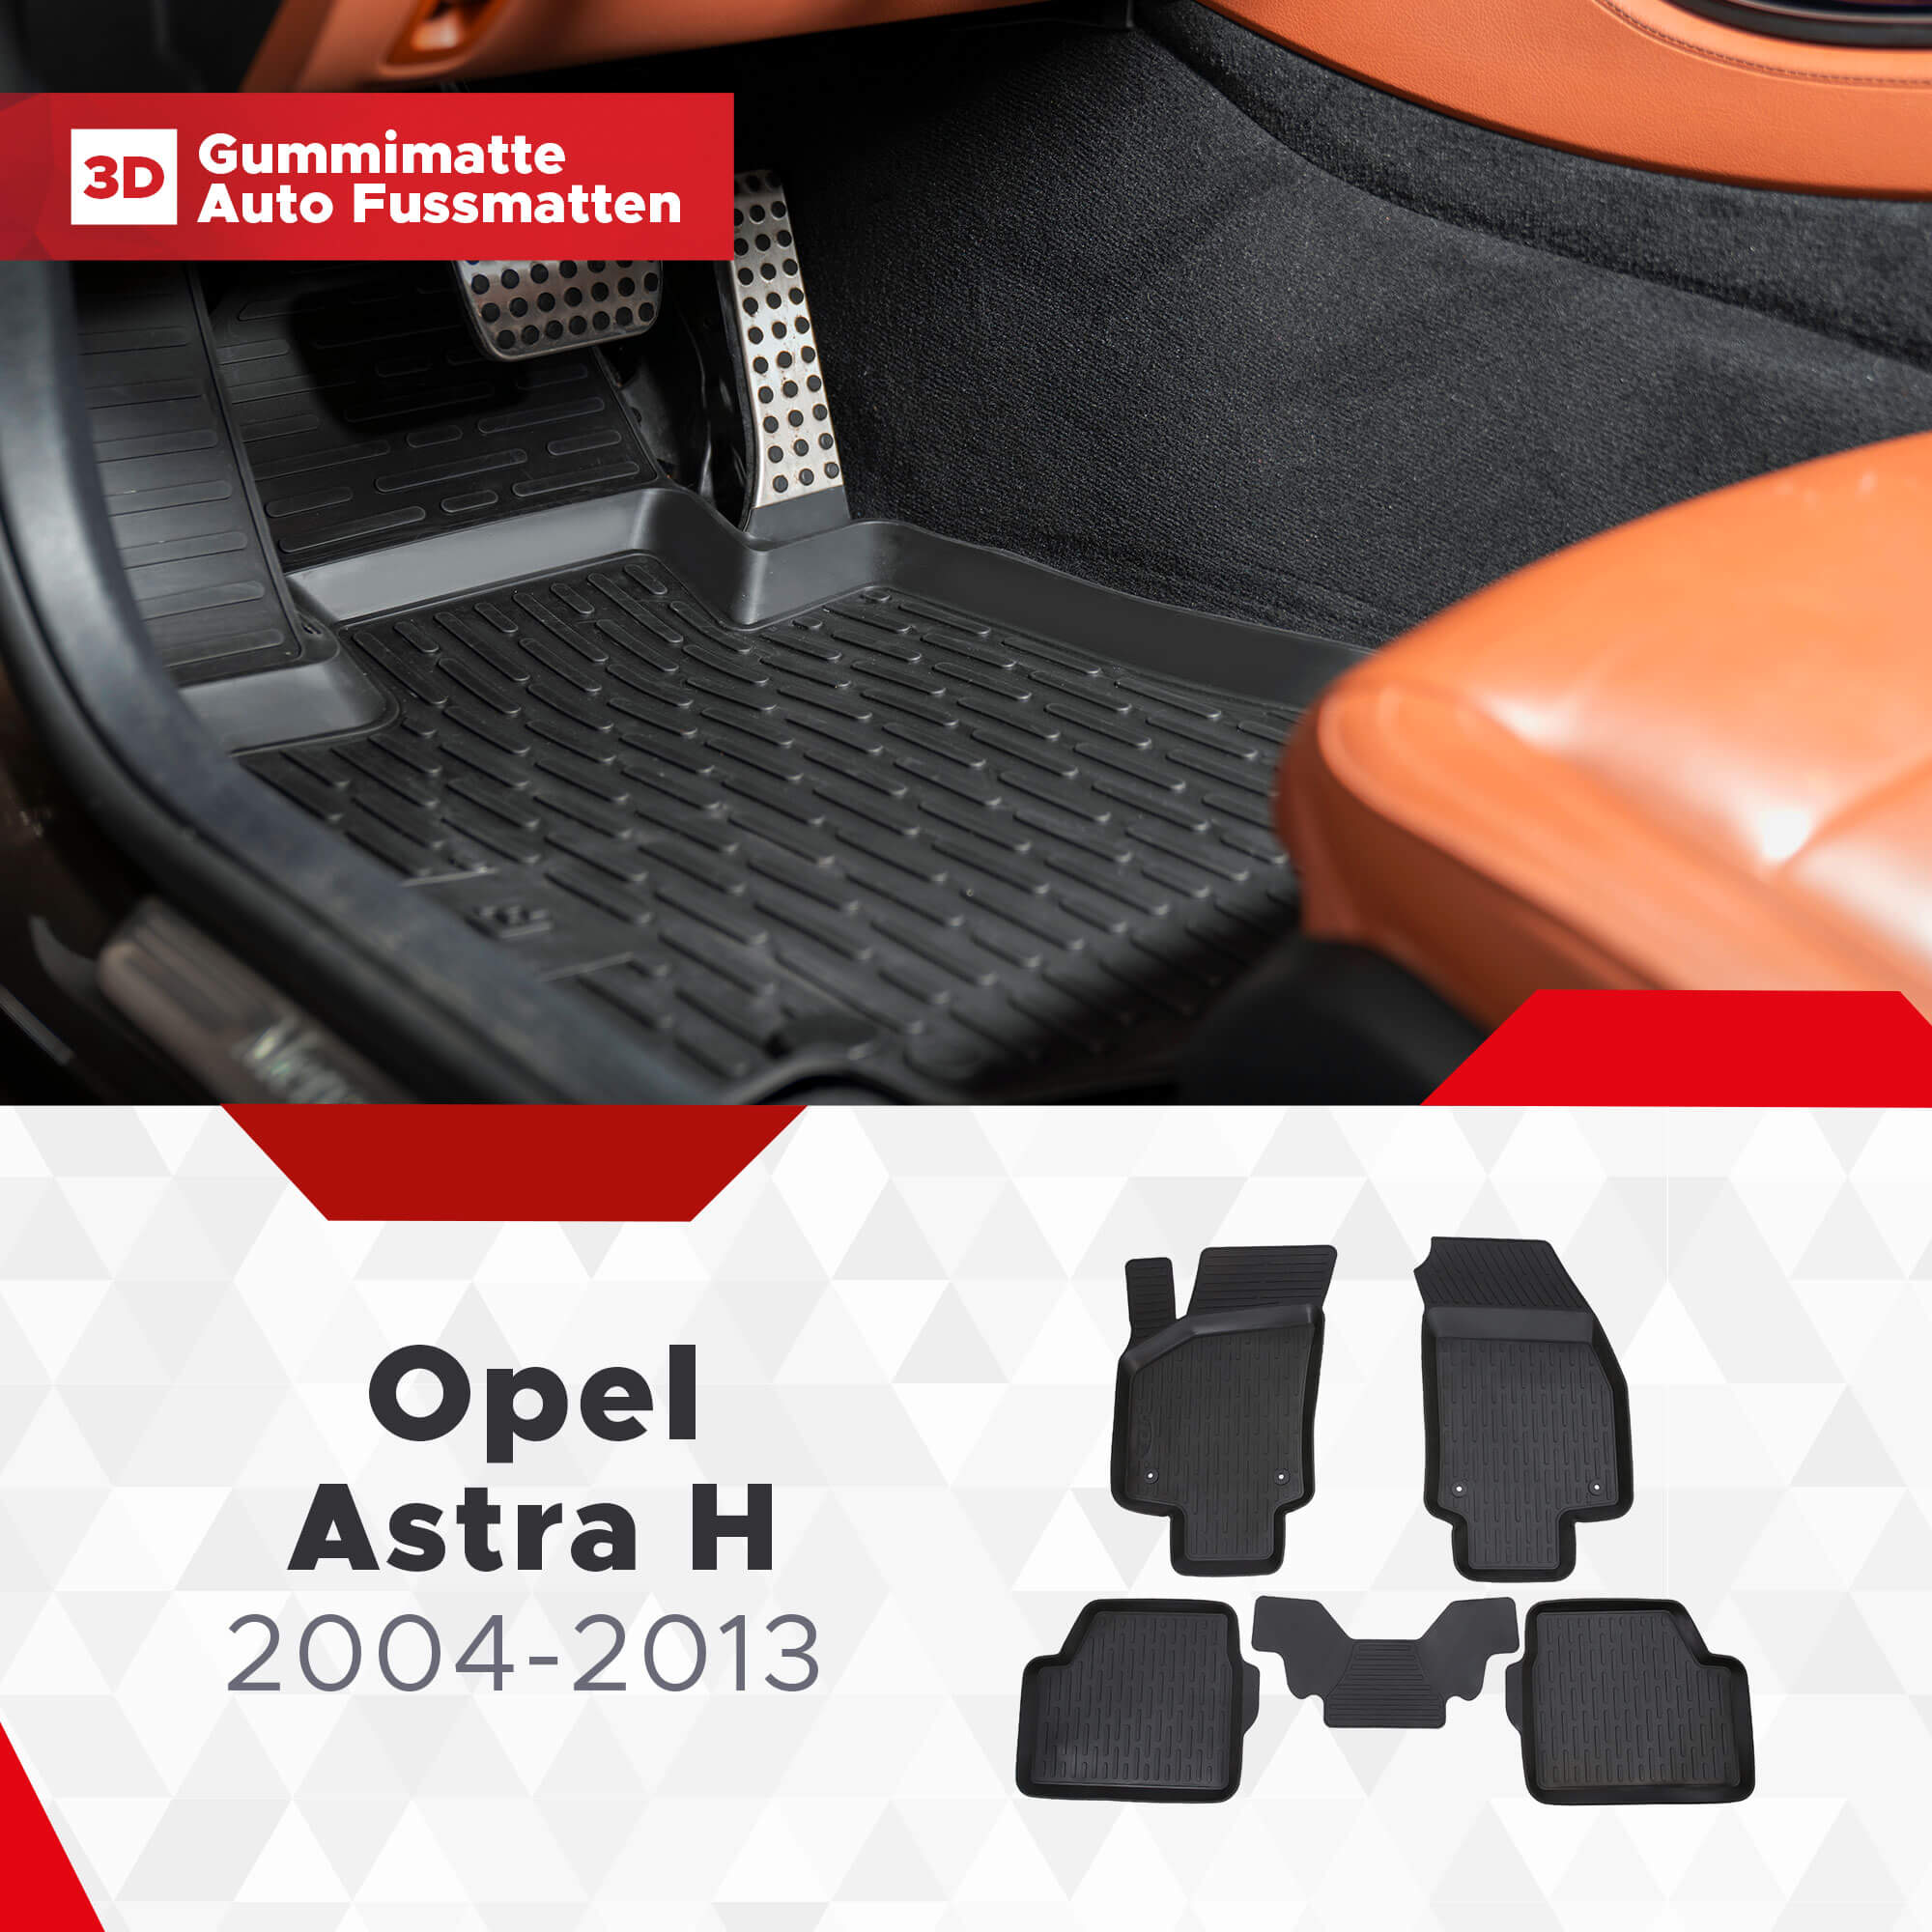 3D Fussmatten passend für Opel H 2013 2004 Astra 